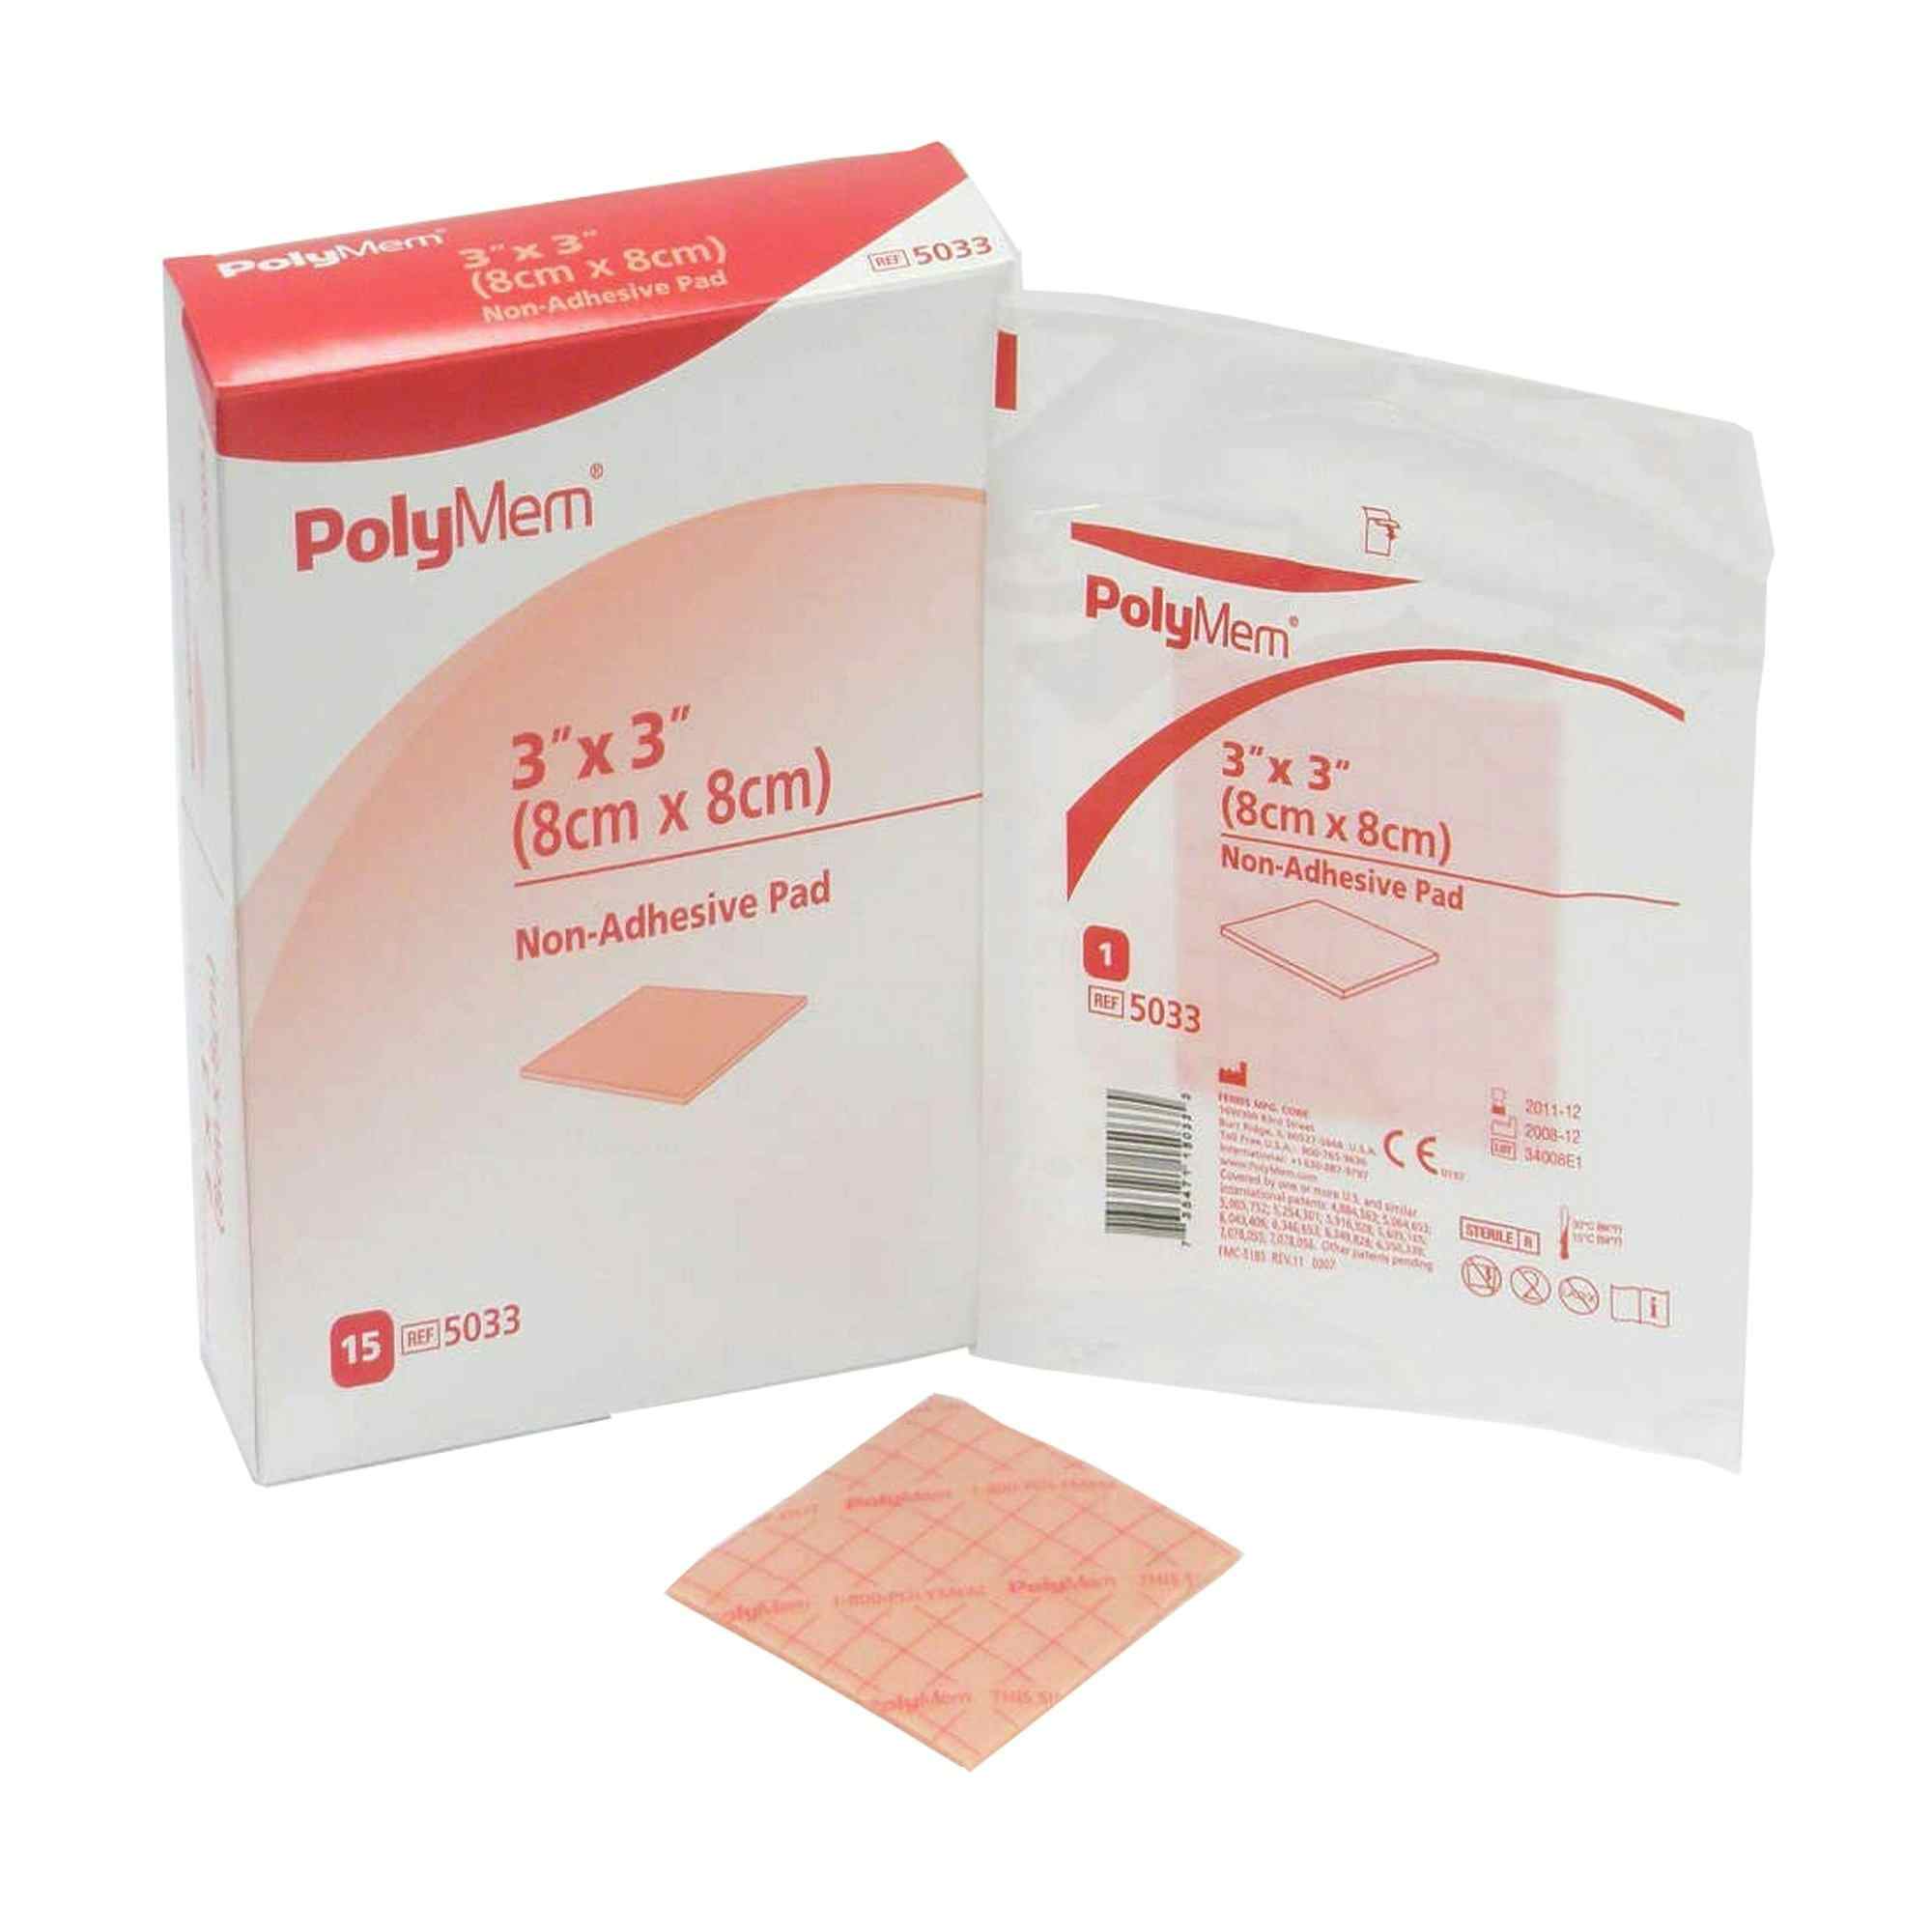 PolyMem Non-Adhesive Pads, 3 X 3"